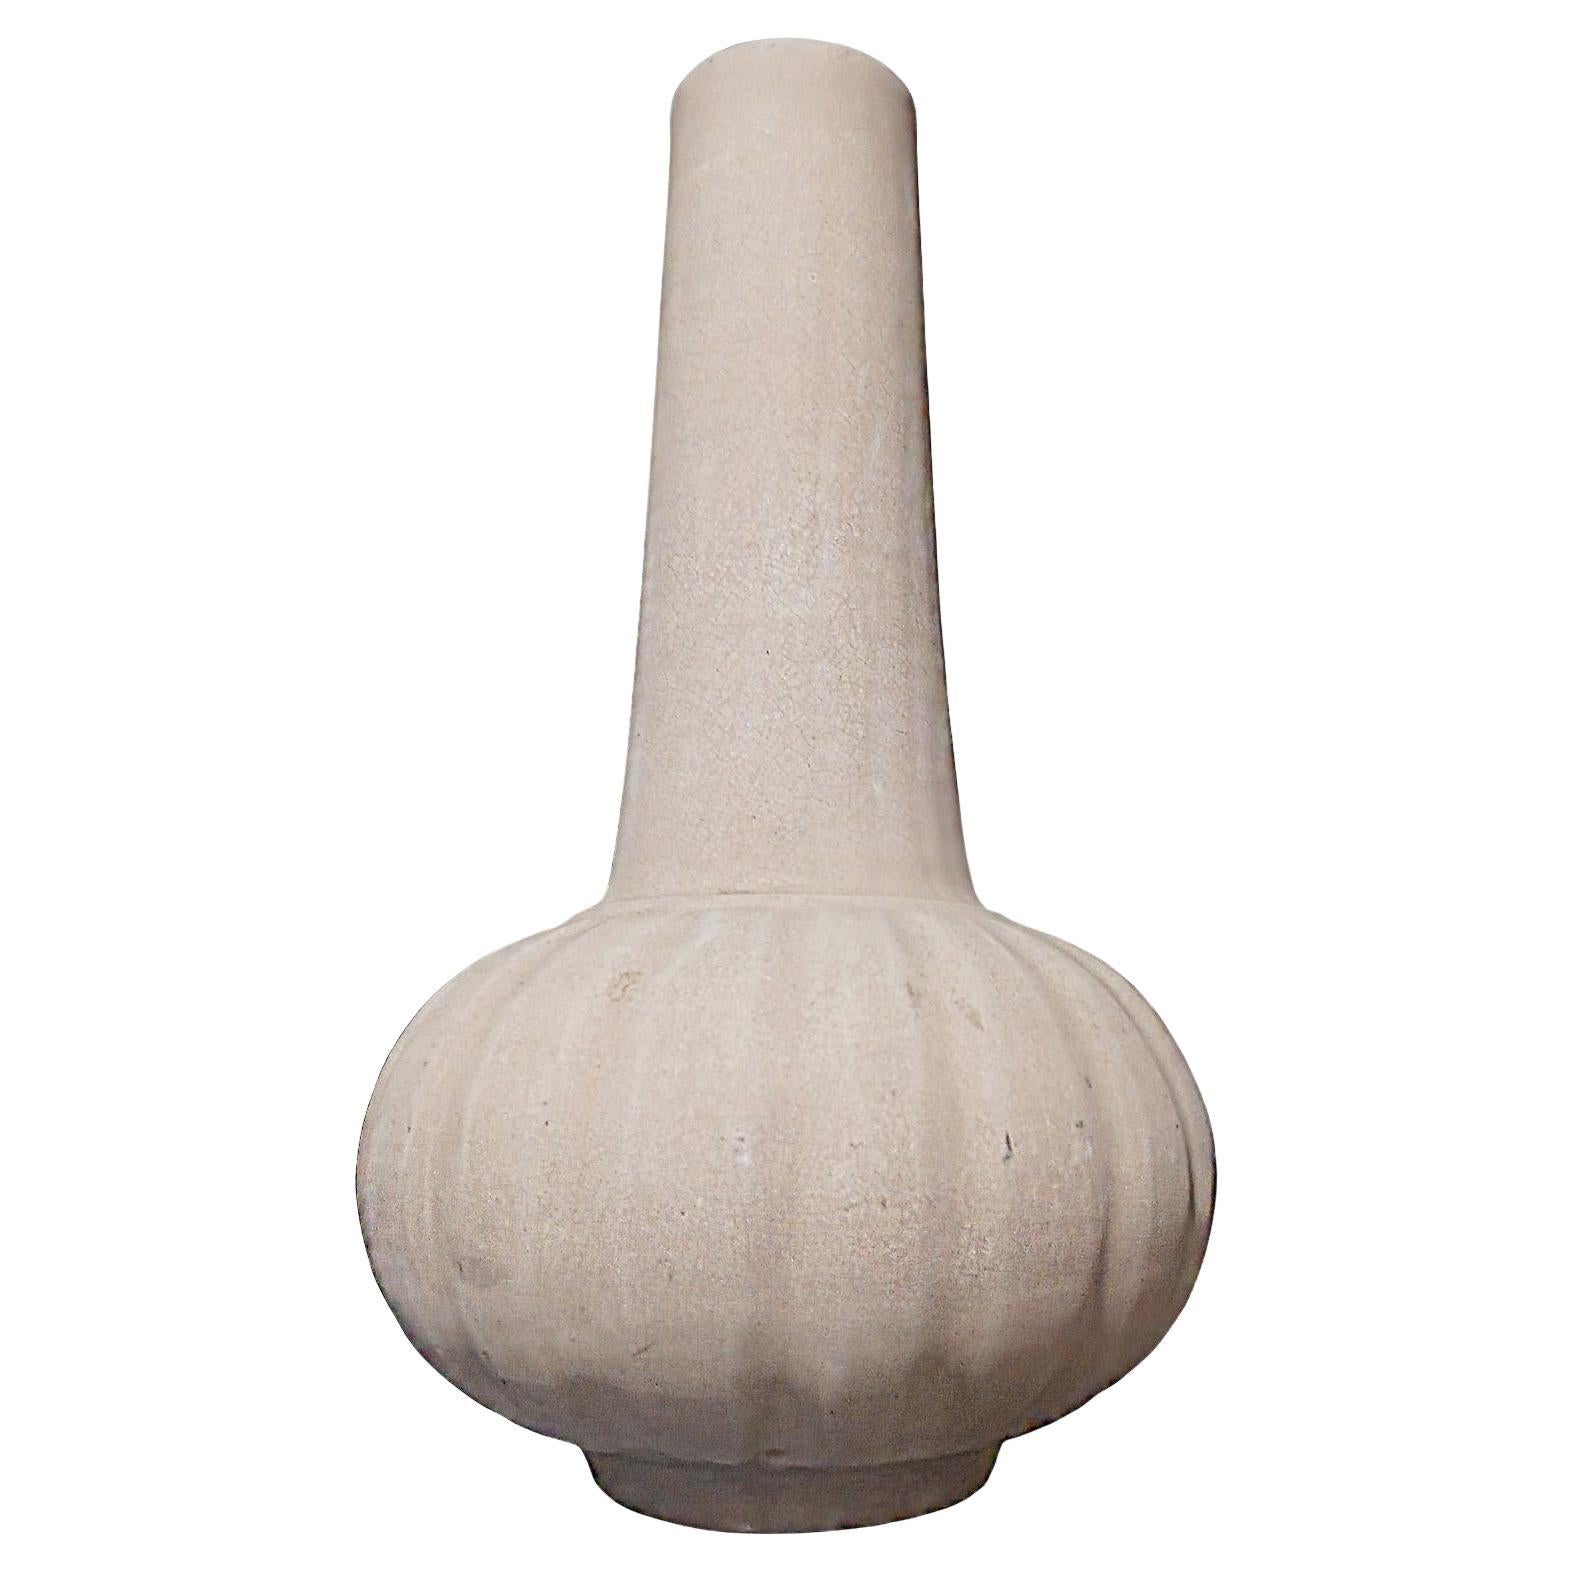 Thai Ceramic Vase with Light Beige Glaze